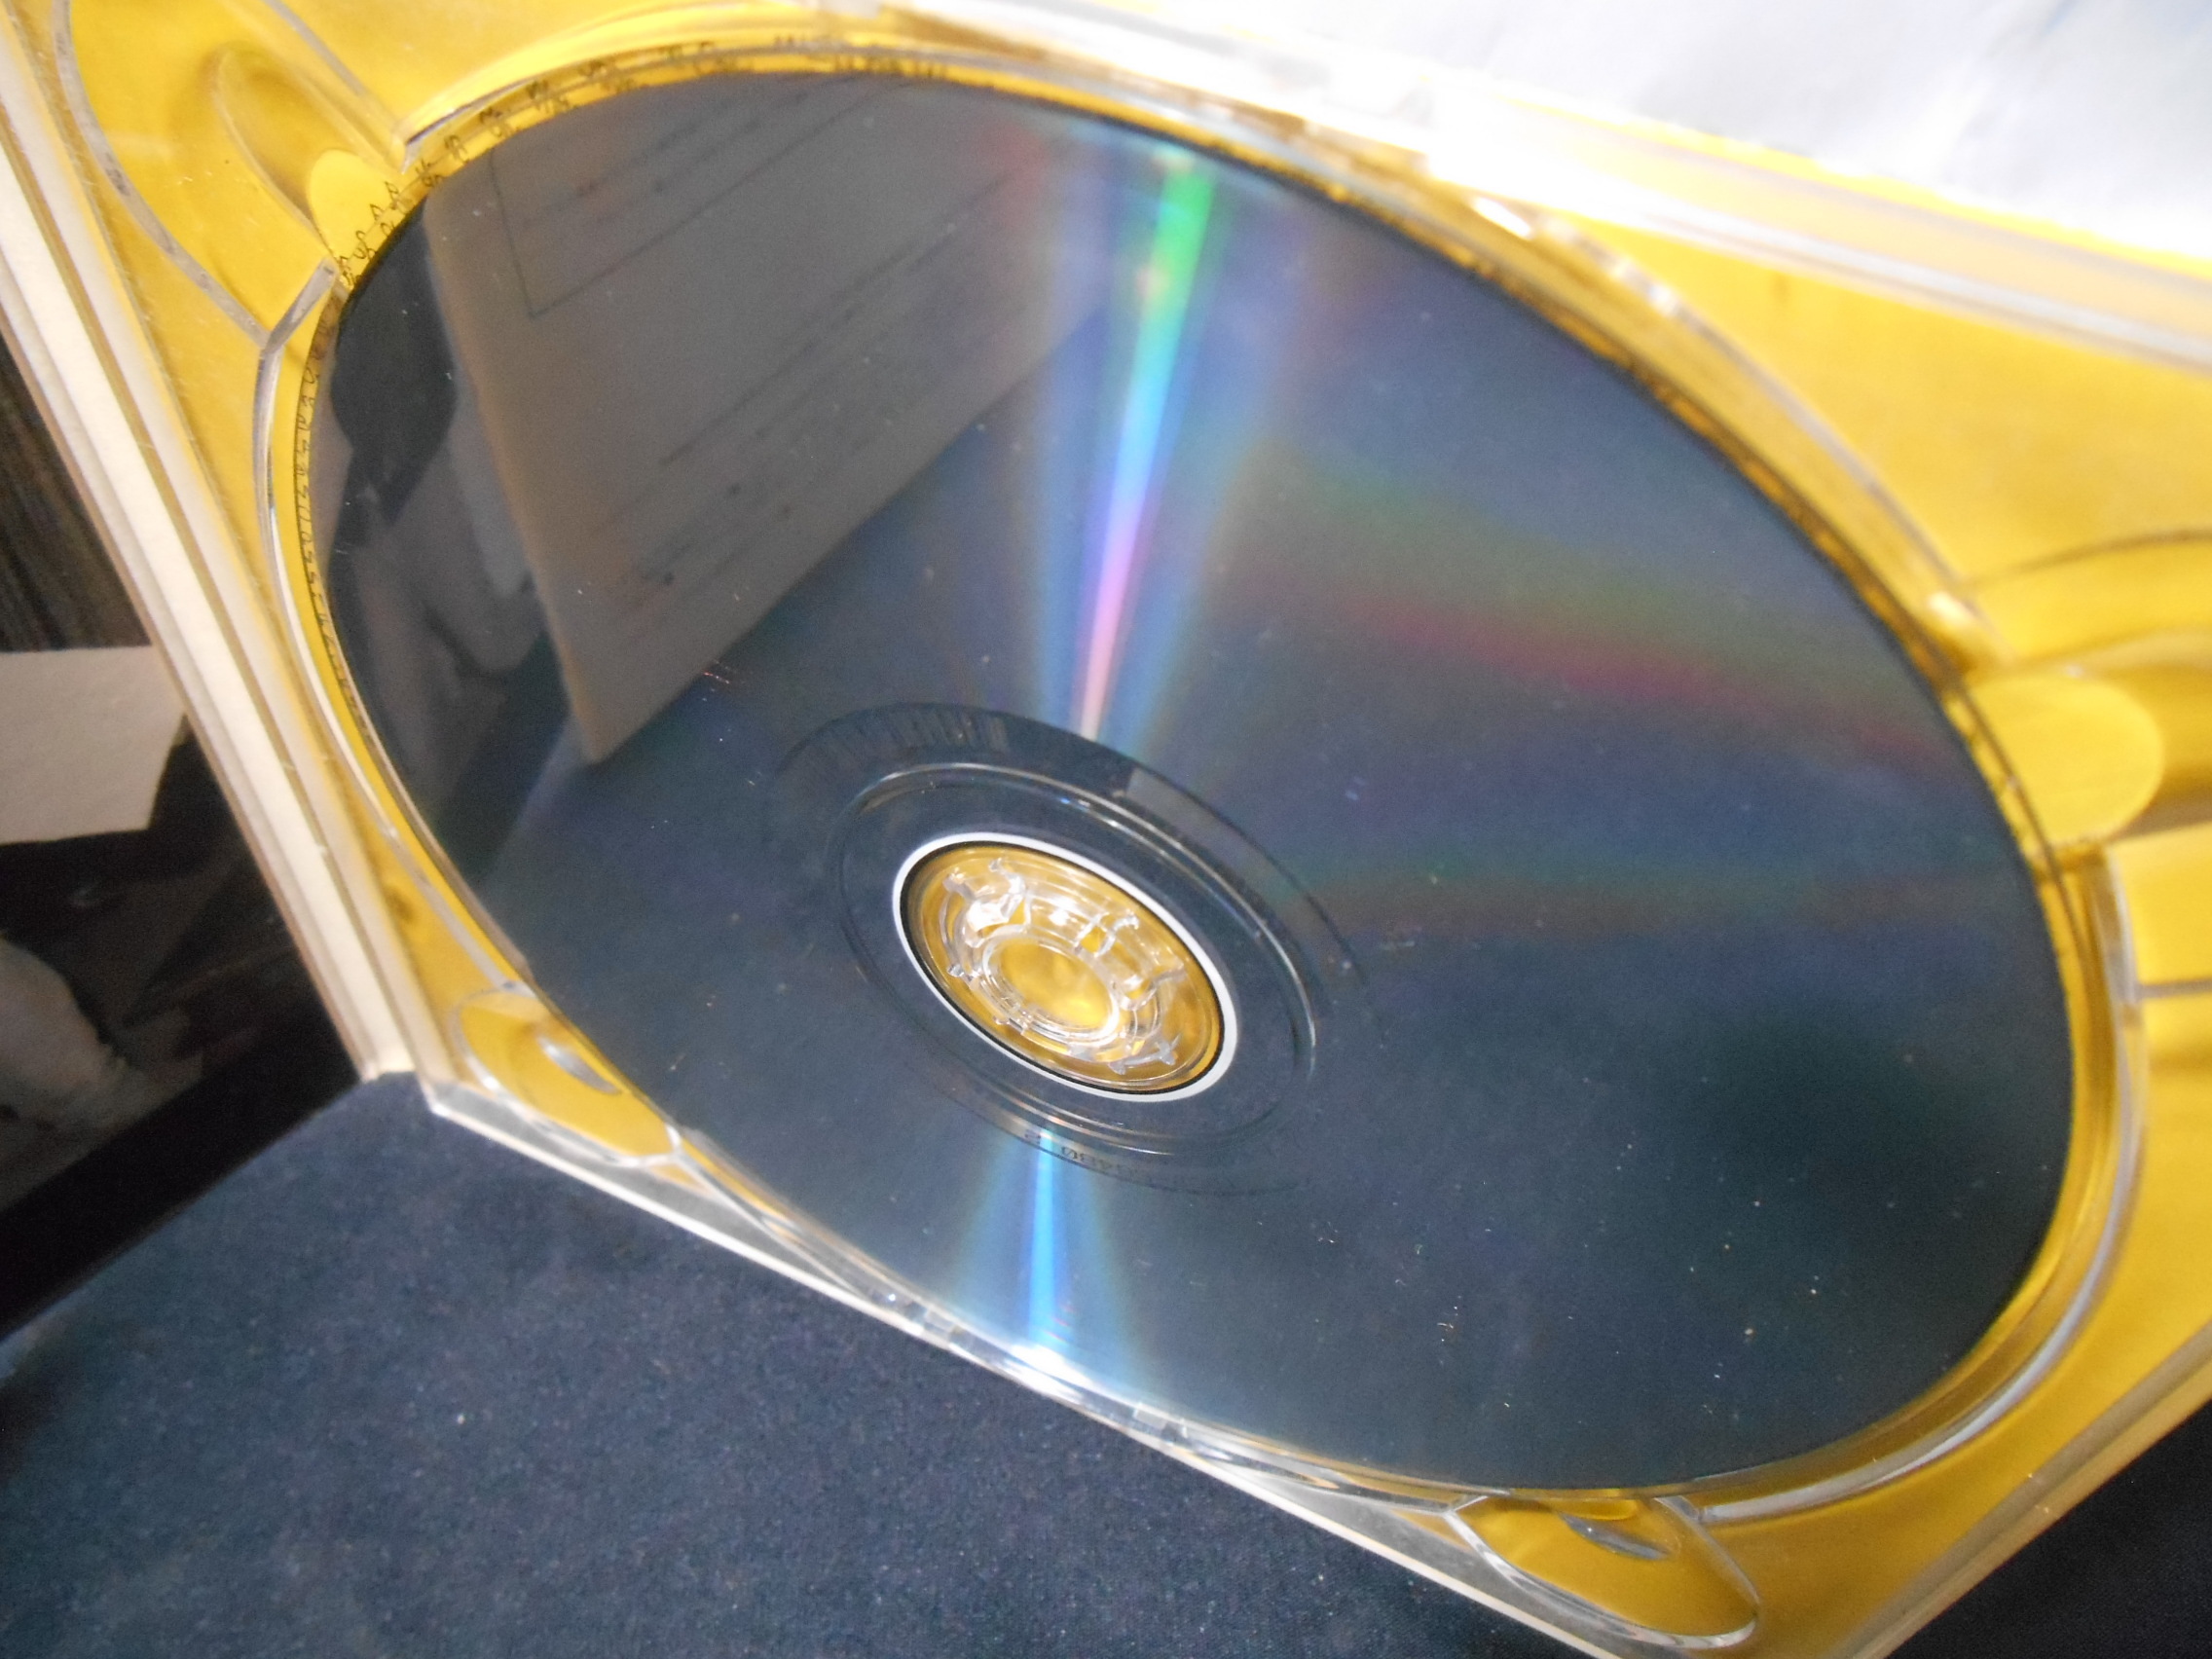 CD - Beastie Boys - Solid Gold Hits (Digipack/Japan)